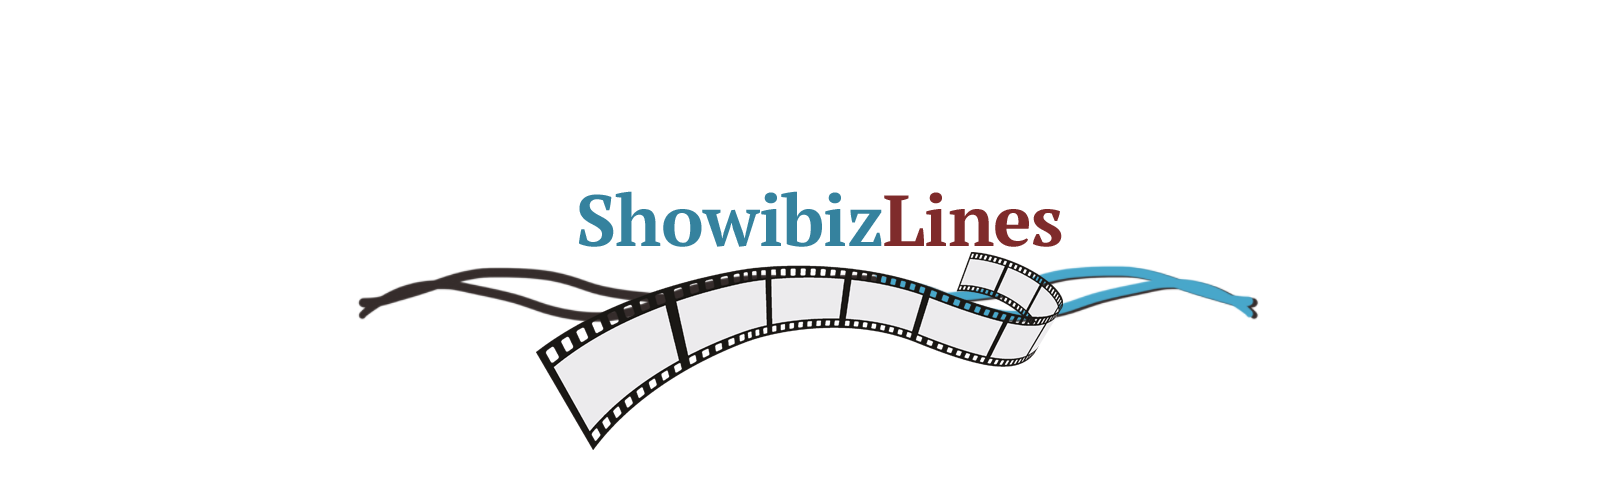 Showbiz Lines